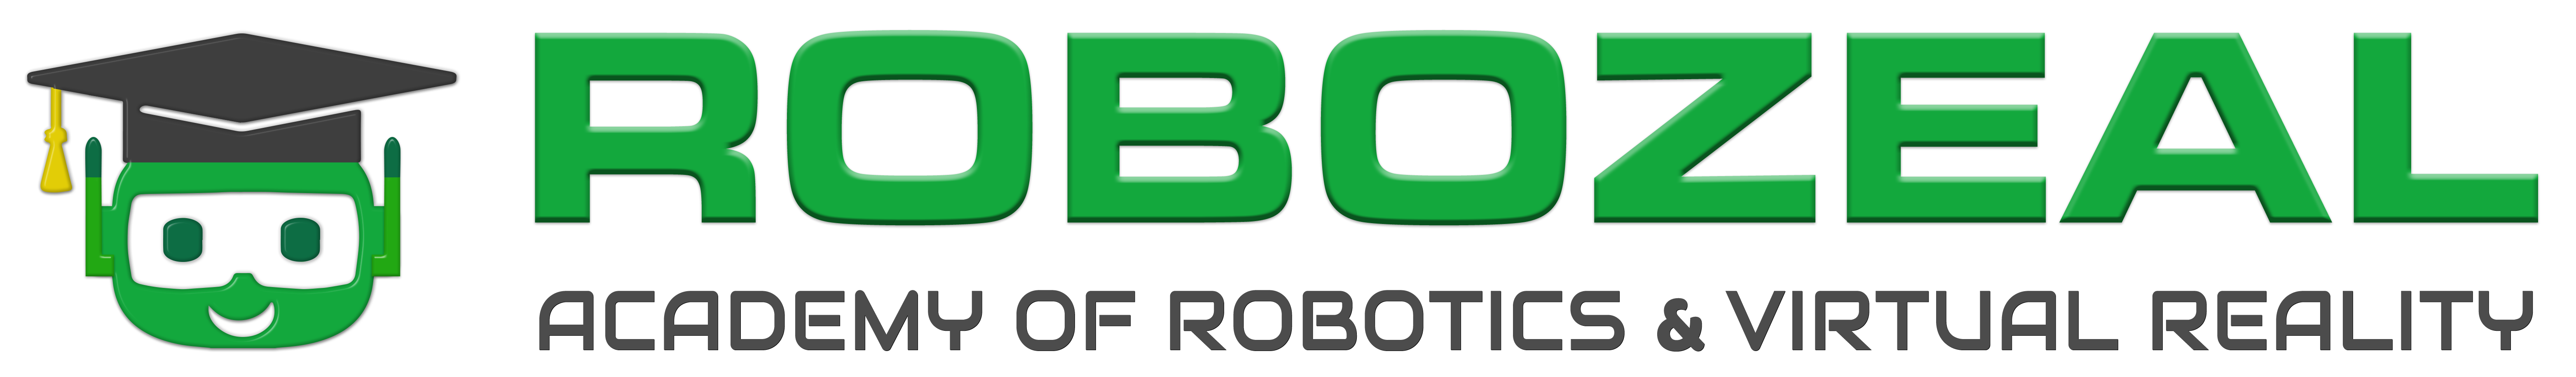 ROBOZEAL ROBOTICS ACADEMY